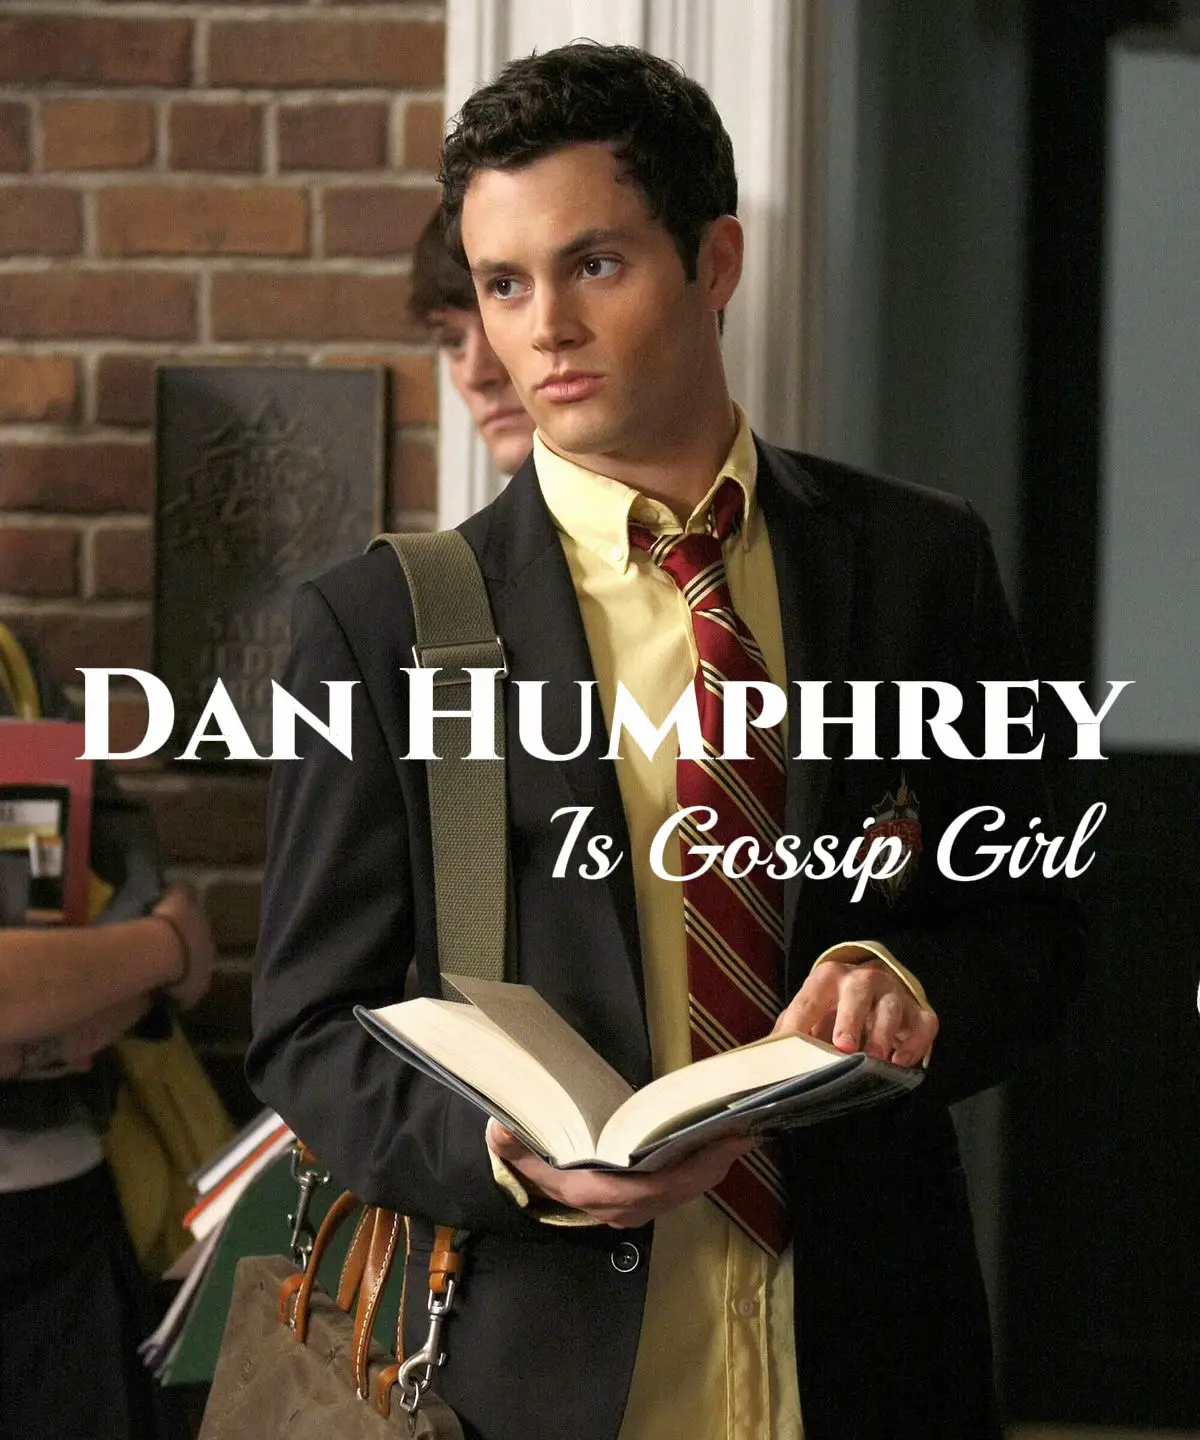 Every Hair Jenny Hamphrey Ever Had on Gossip Girl 🖤 : r/GossipGirl